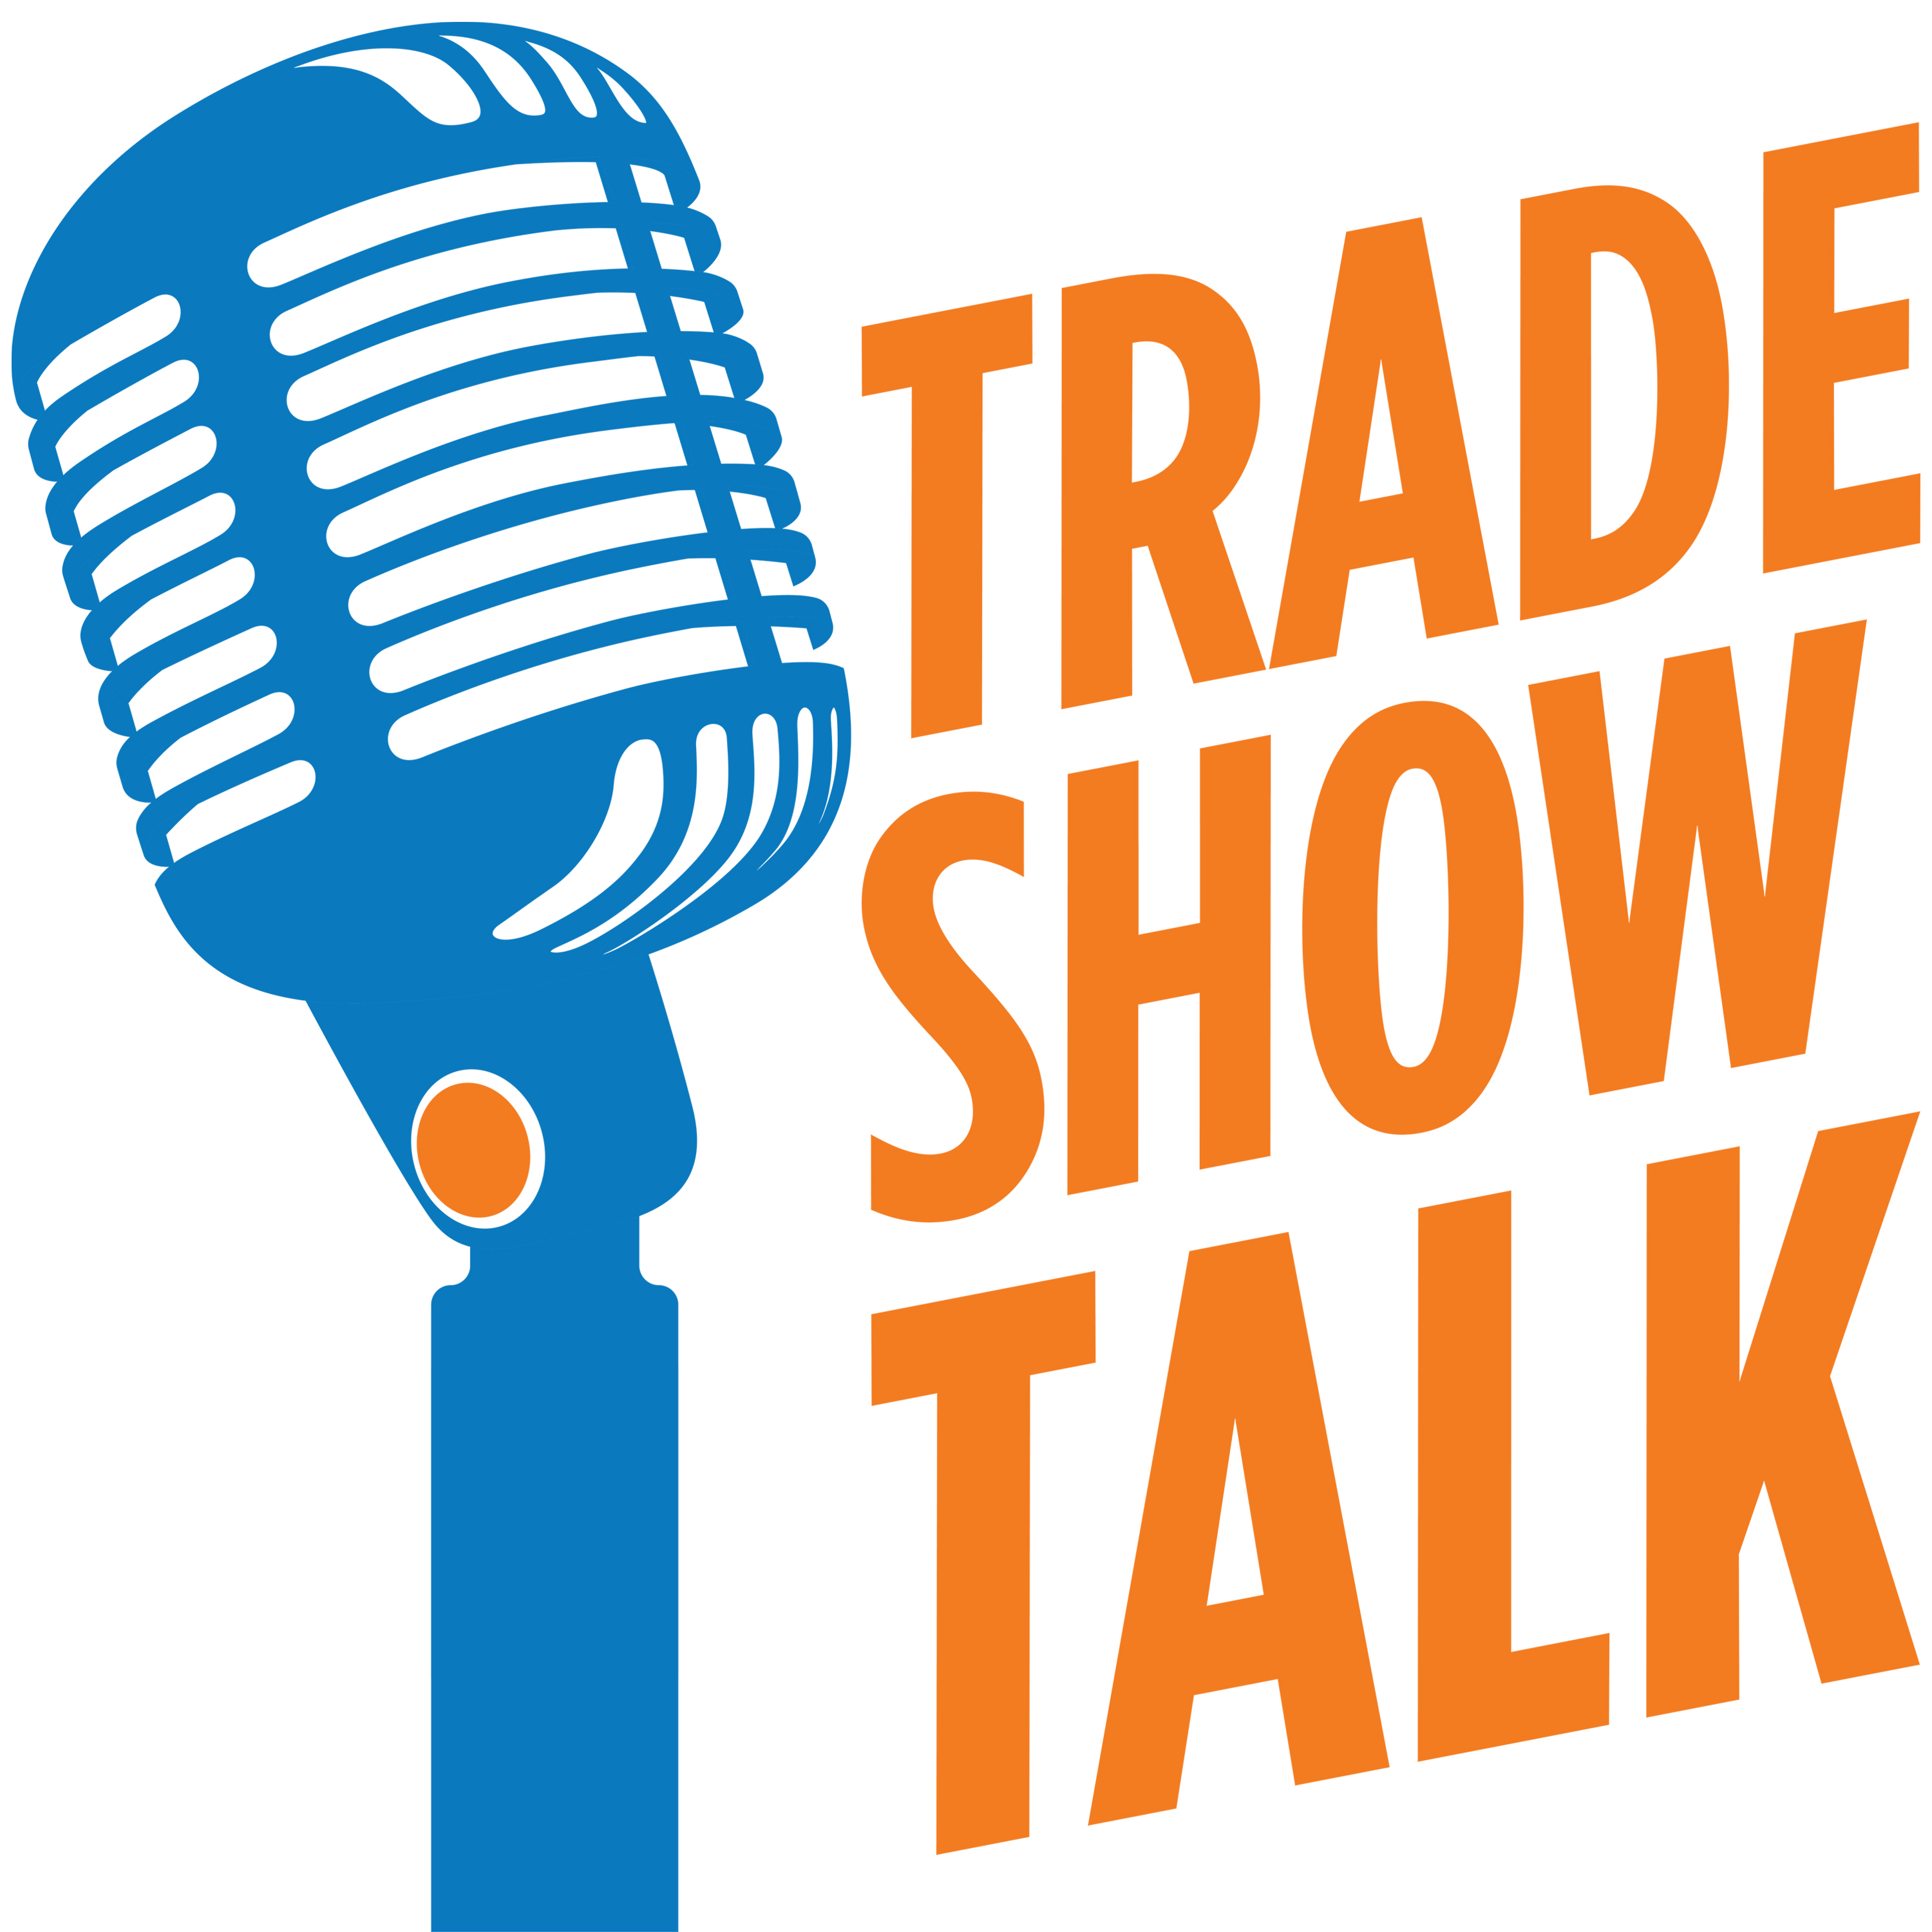 TSNN Podcast Trade Show Talk TSNN Trade Show News